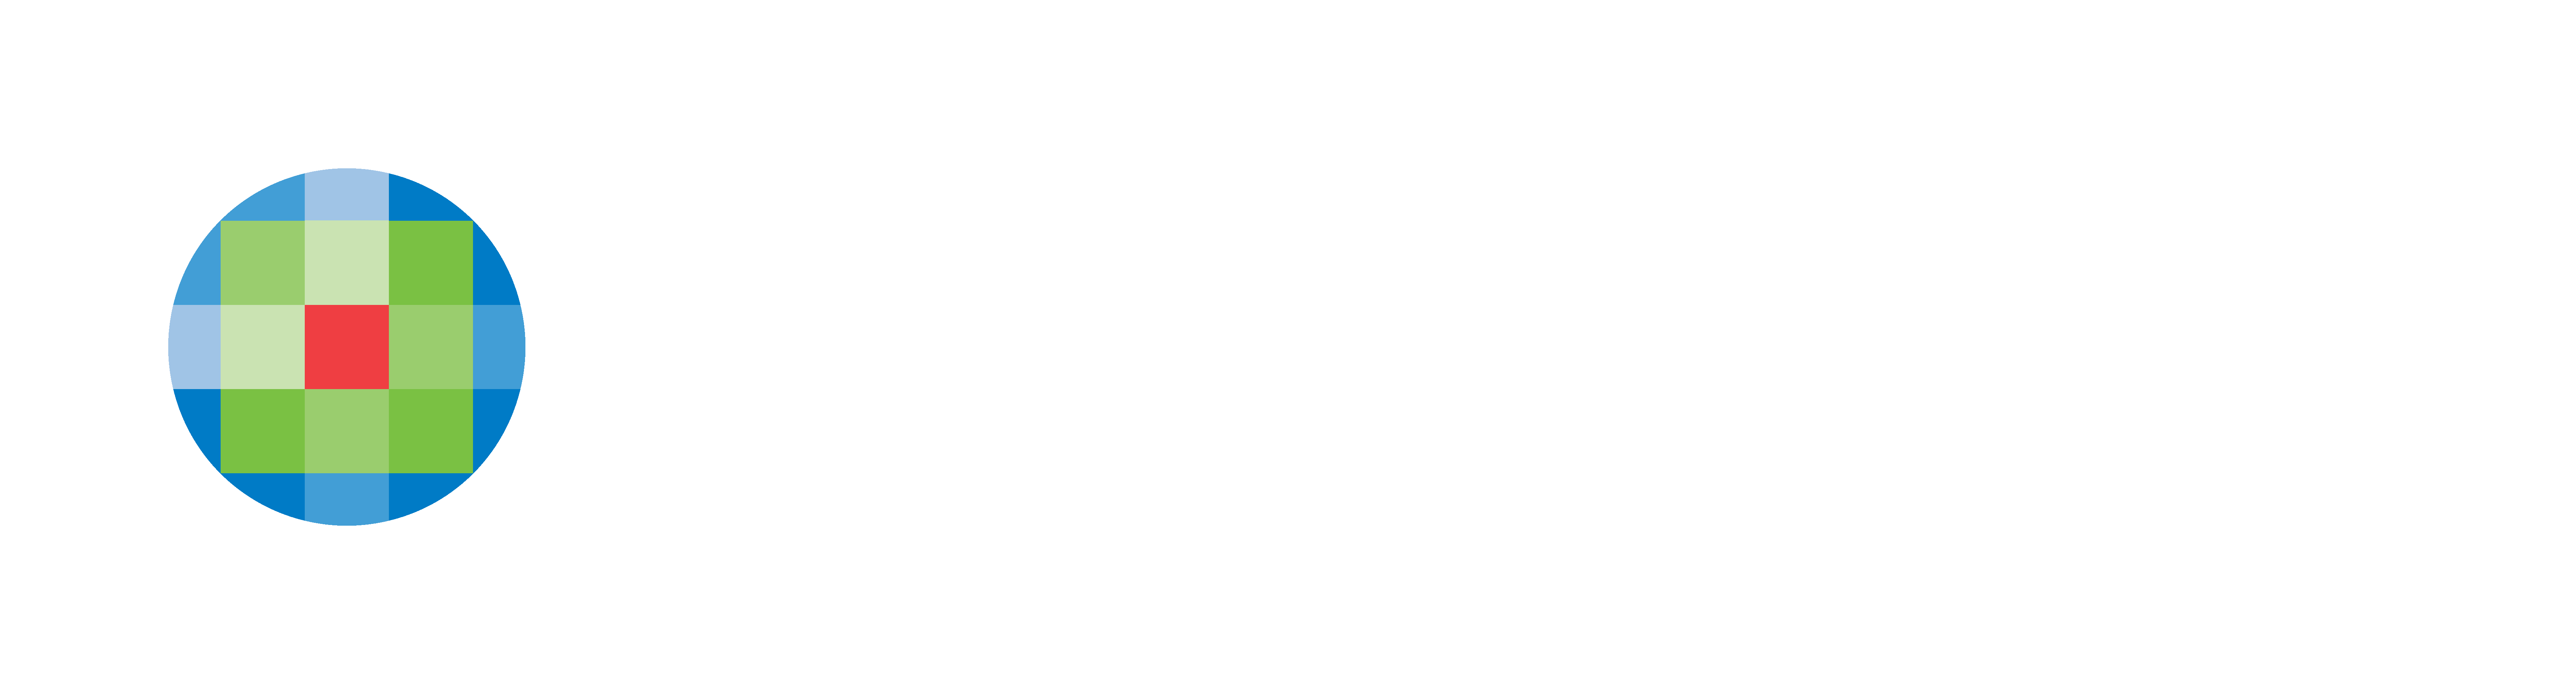 WoltersKluwer logo